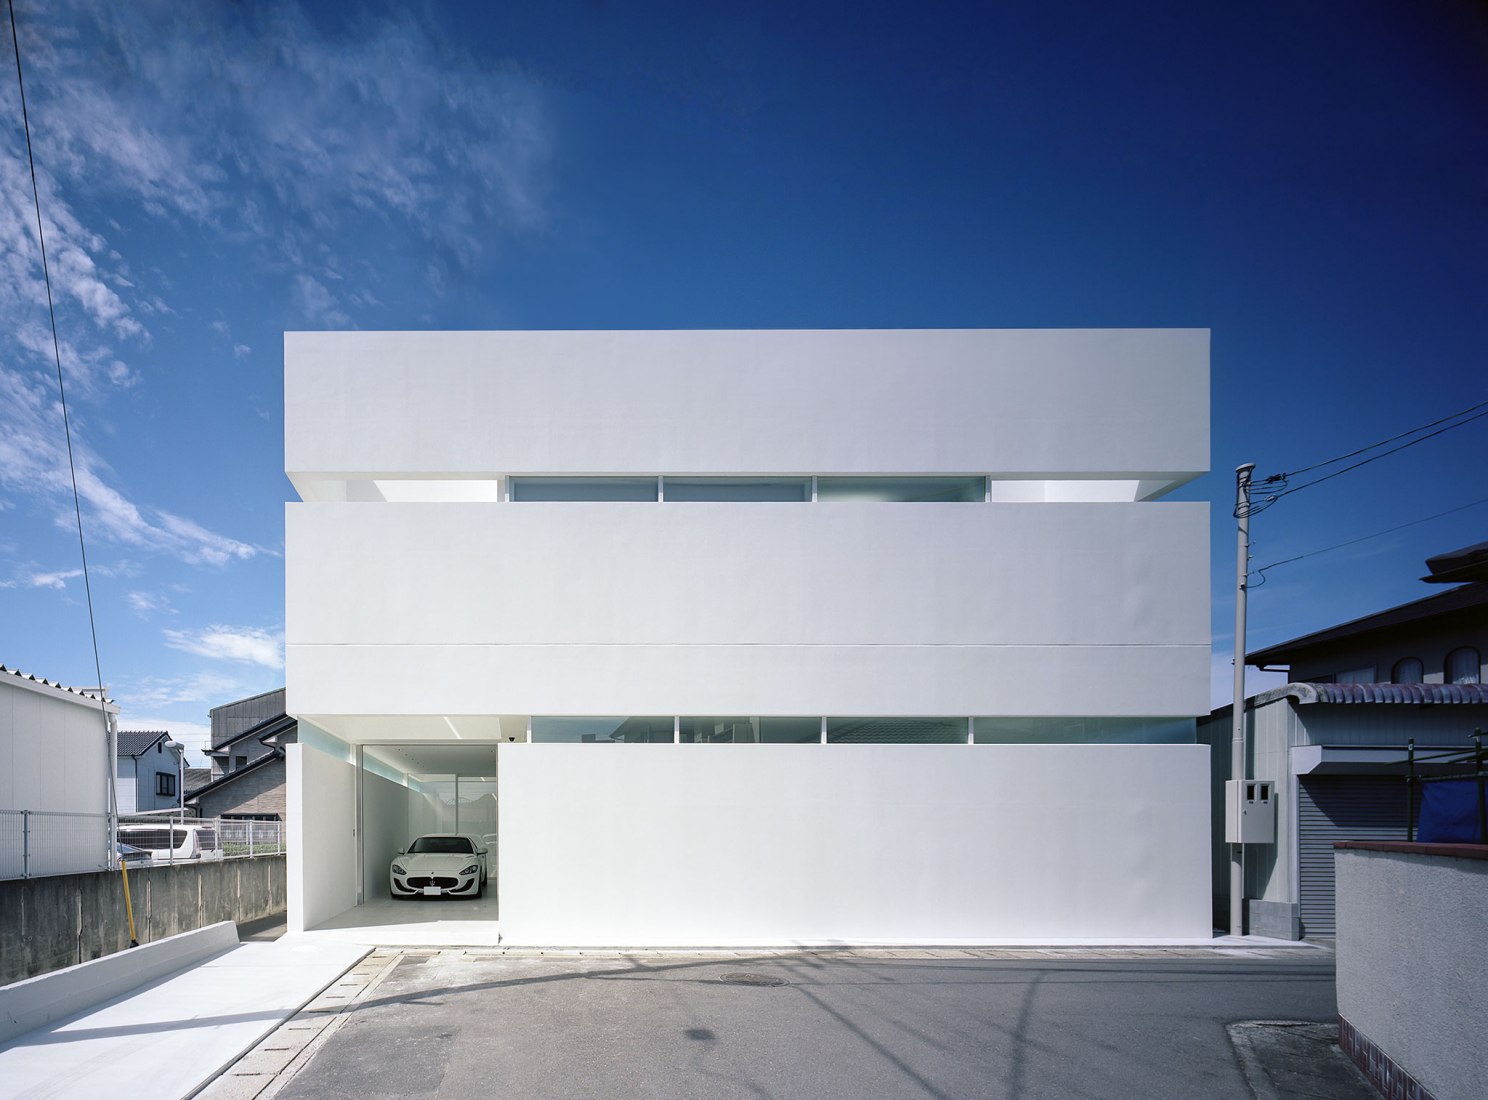  Vivienda en Takamatsu por FujiwaraMuro Arquitectos. Fotografía por Katsuya. Taira